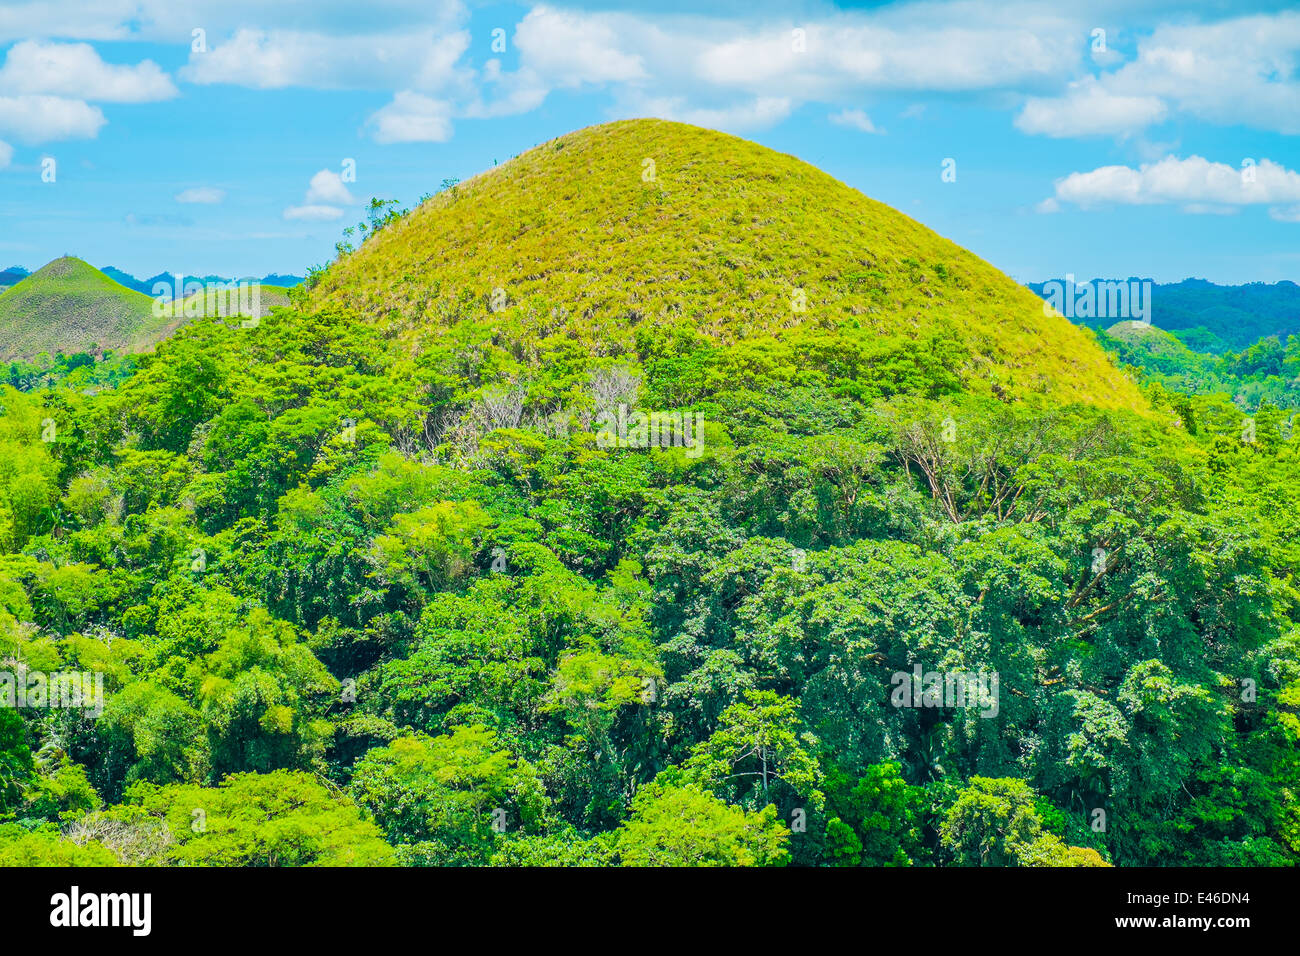 Famous Chocolate Hills natural landmark, Bohol island, Philippines Stock Photo